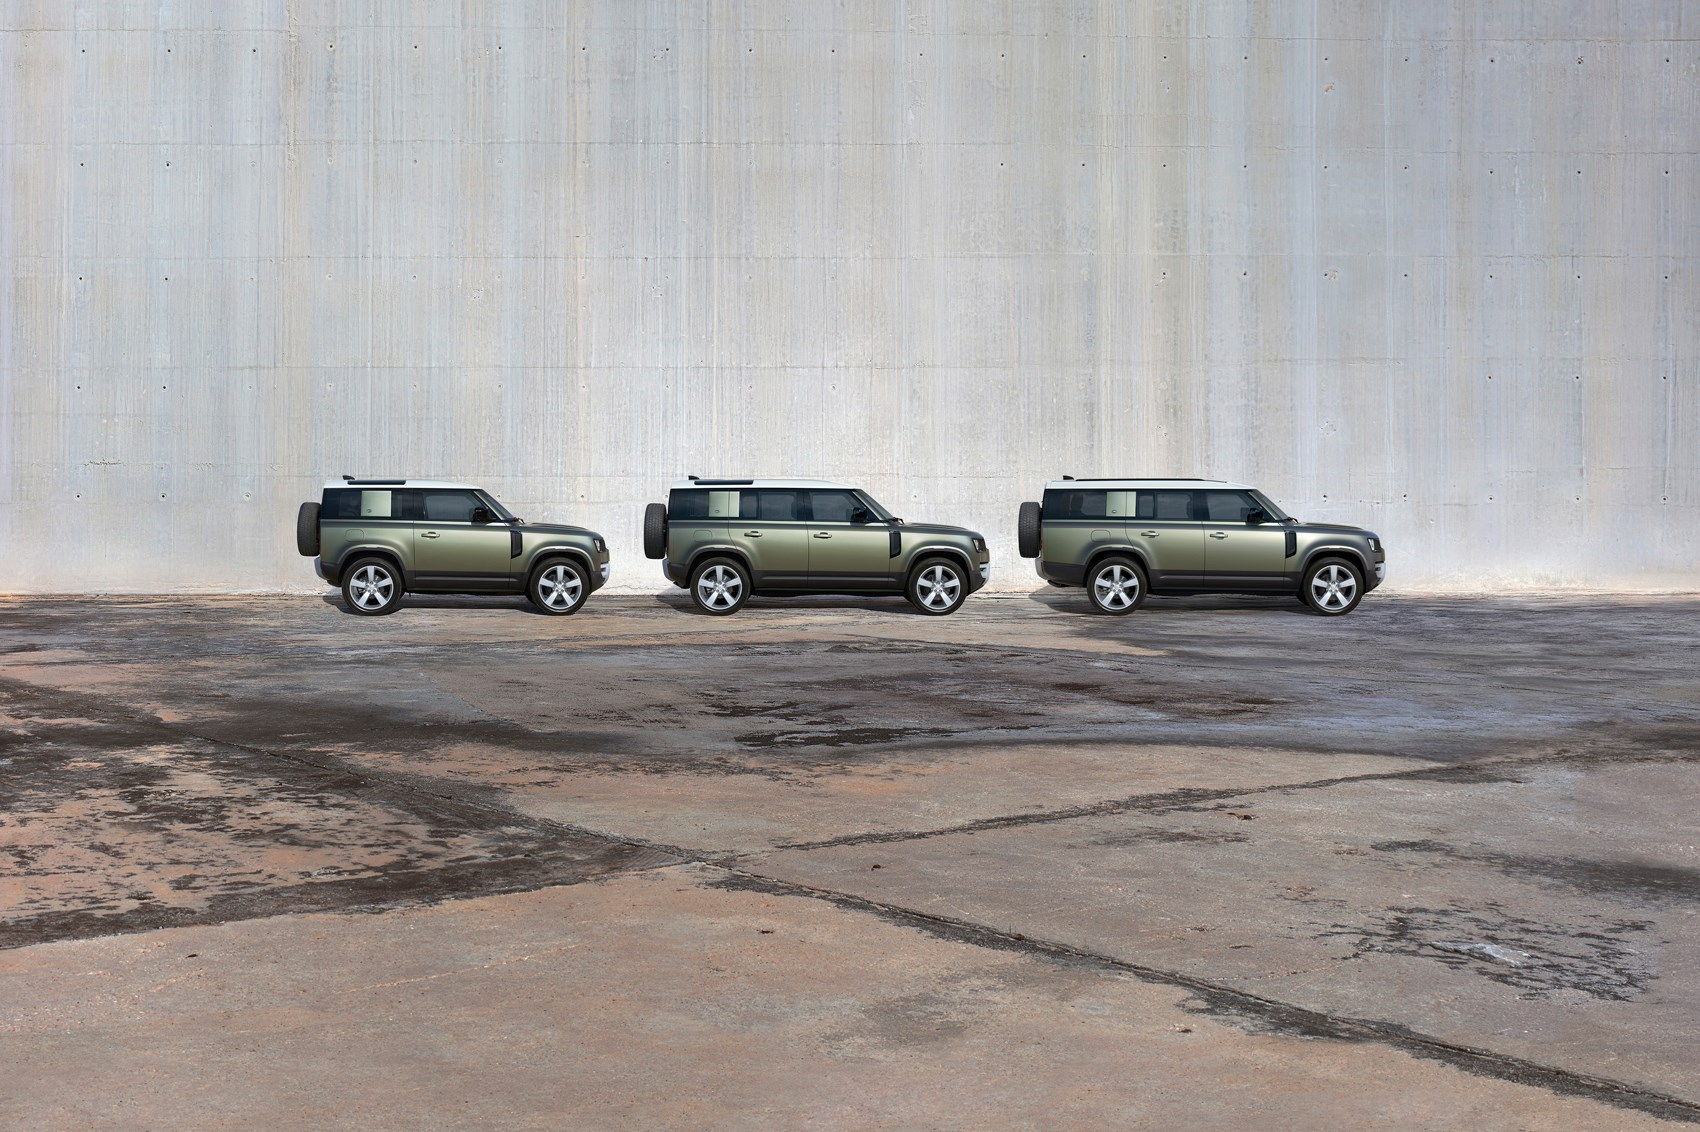 Special edition Land Rover Defender commemorates icon's 75th